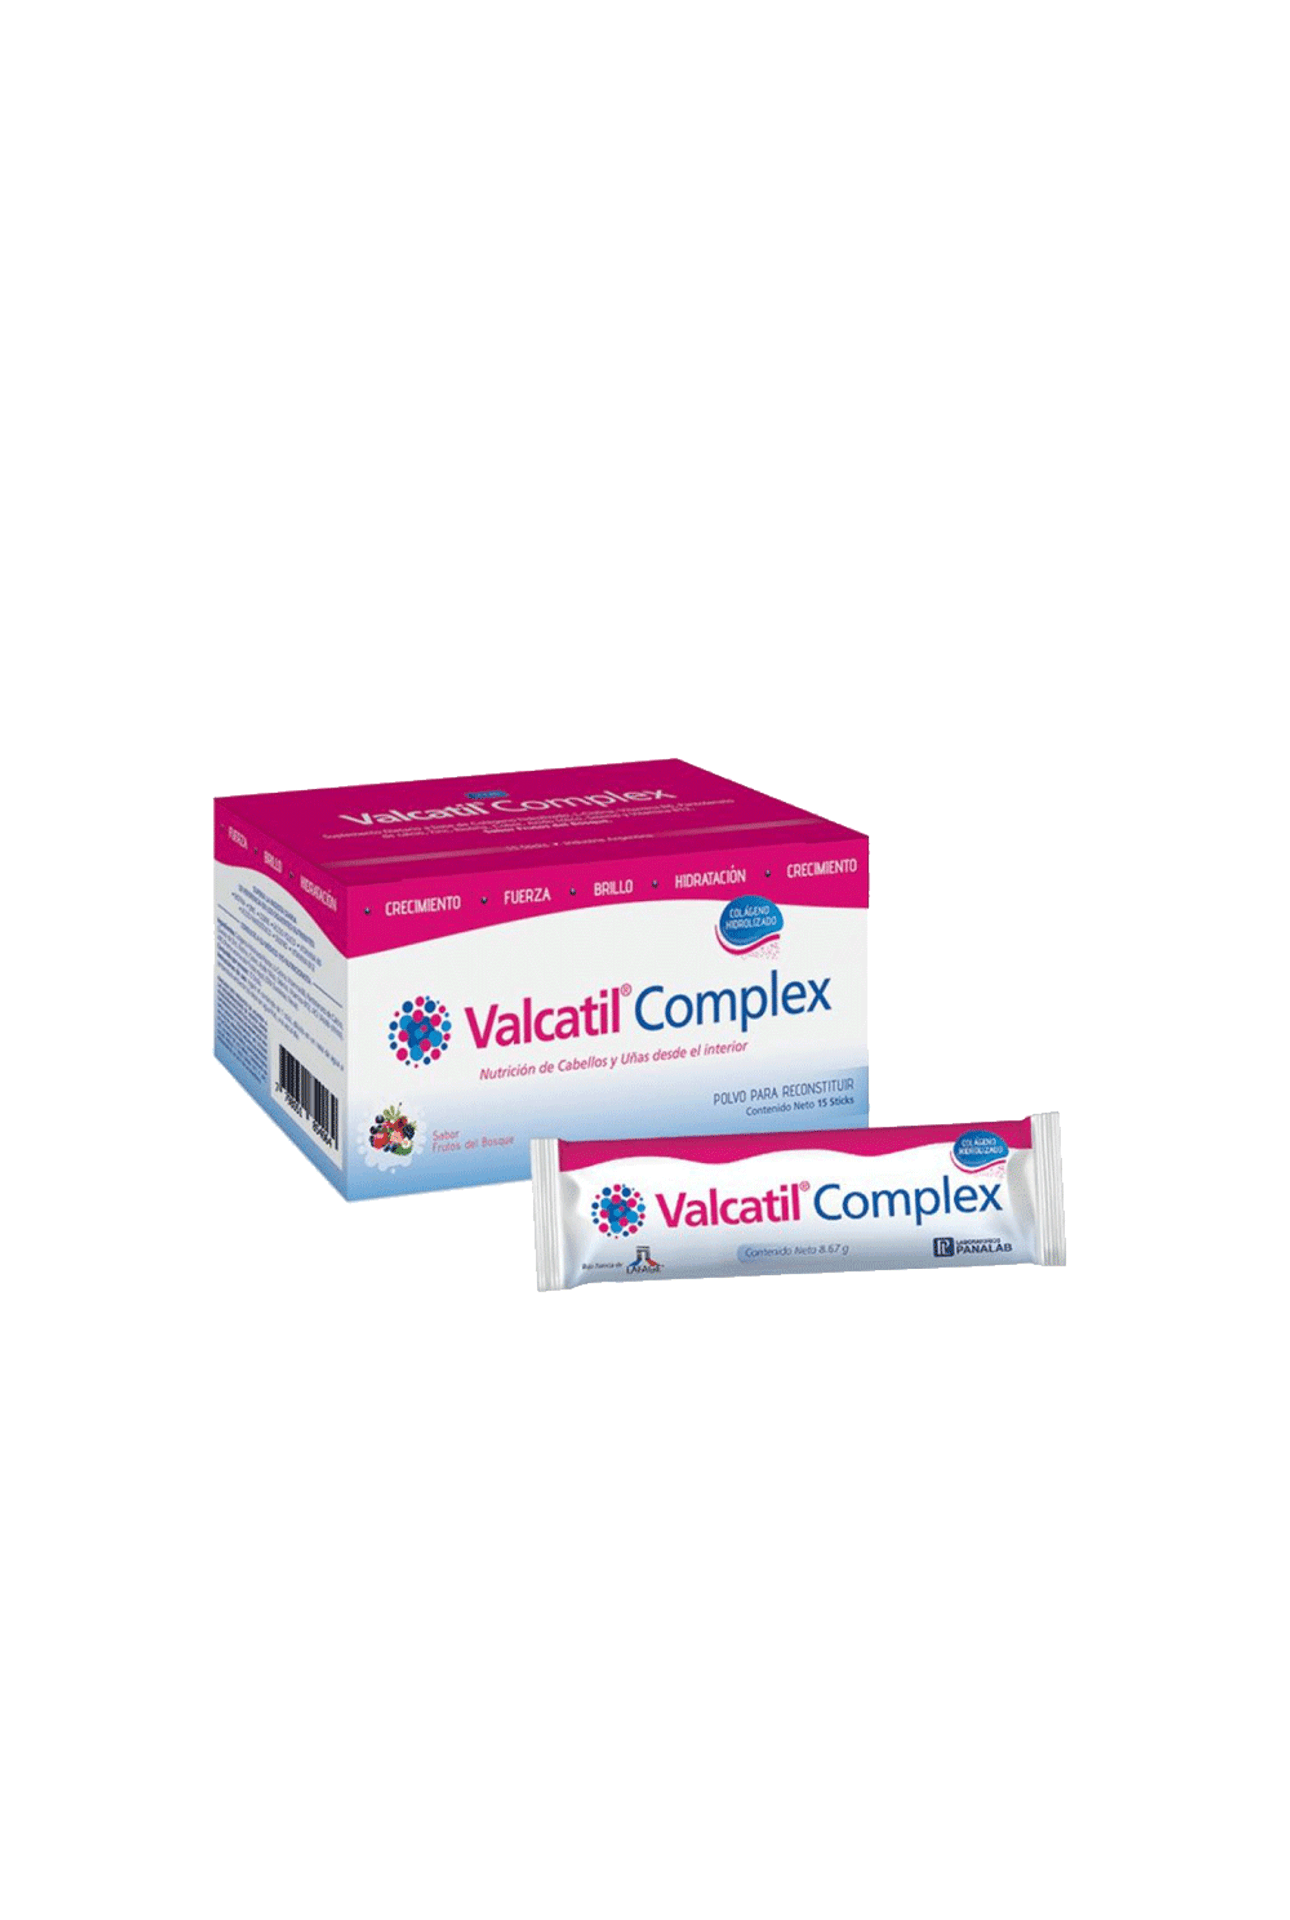 Suplemento-Dietario-Valcatil-Complex-x-15-Sobres-Valcatil